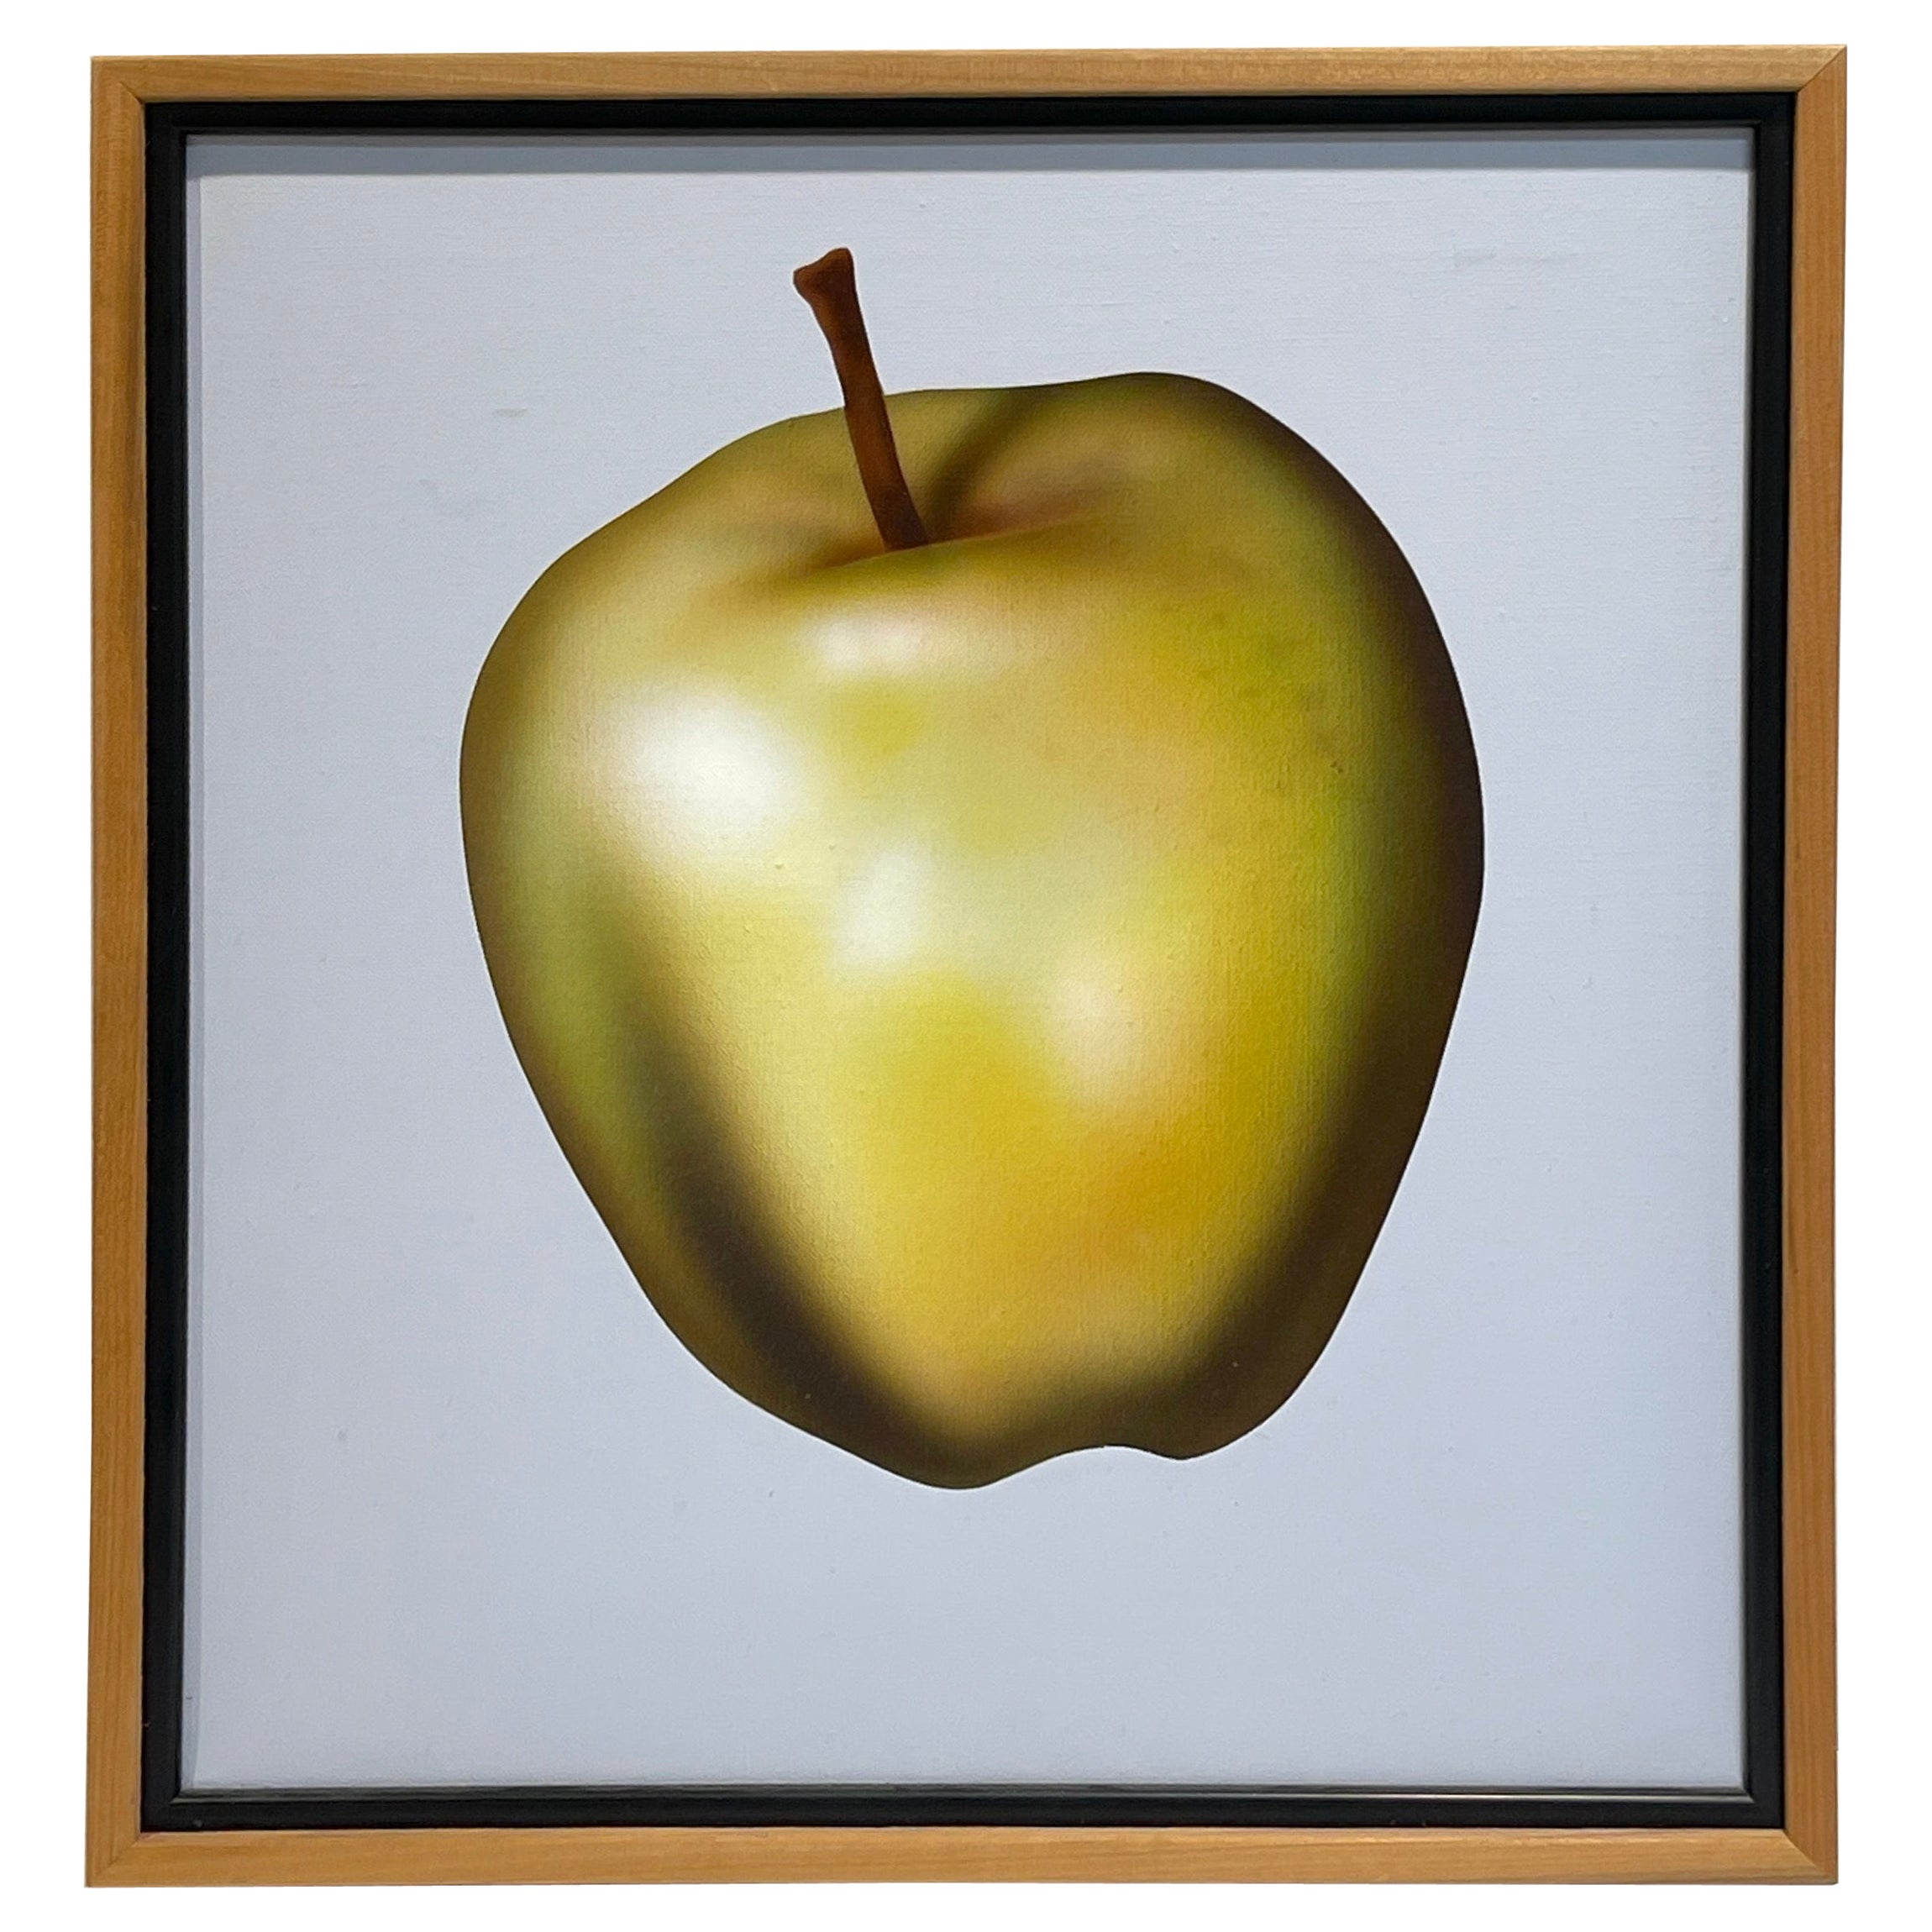 Clarence Measelle, (américaine, née en 1947, pomme verte, 1983